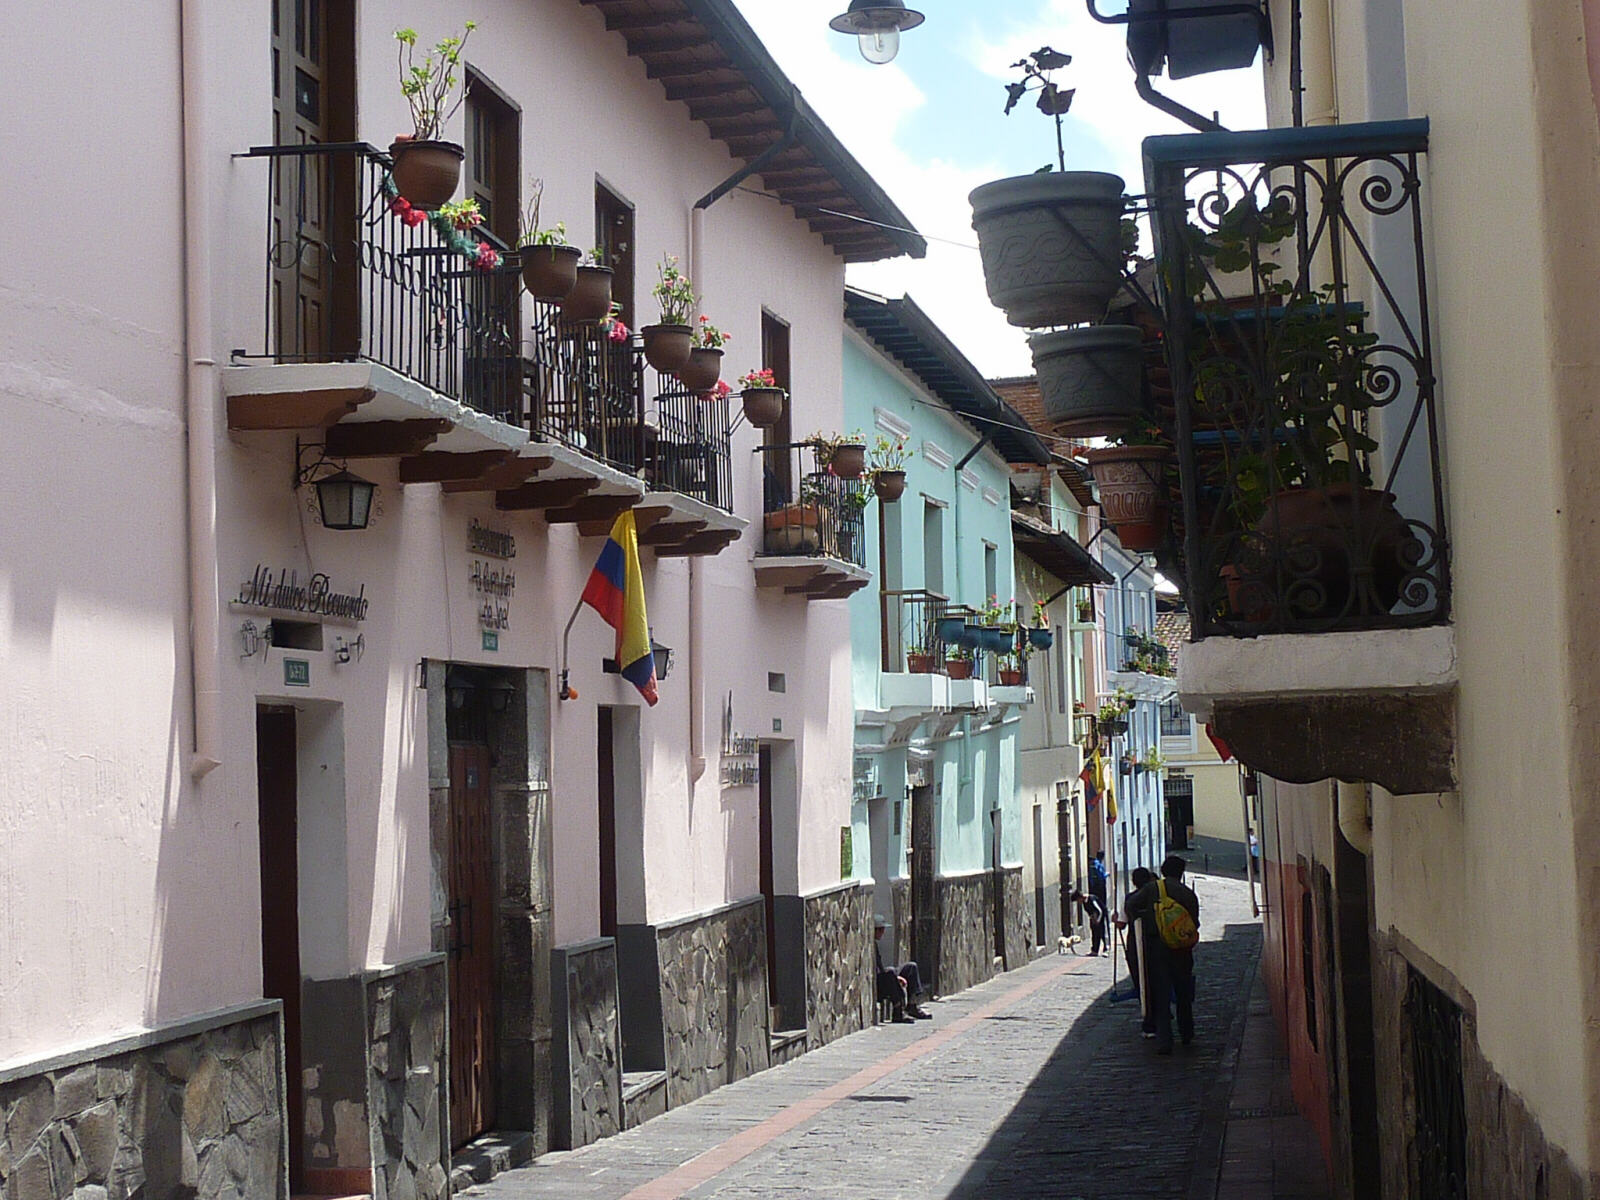 Calle de la Ronda in the old town, Quito, Ecuador